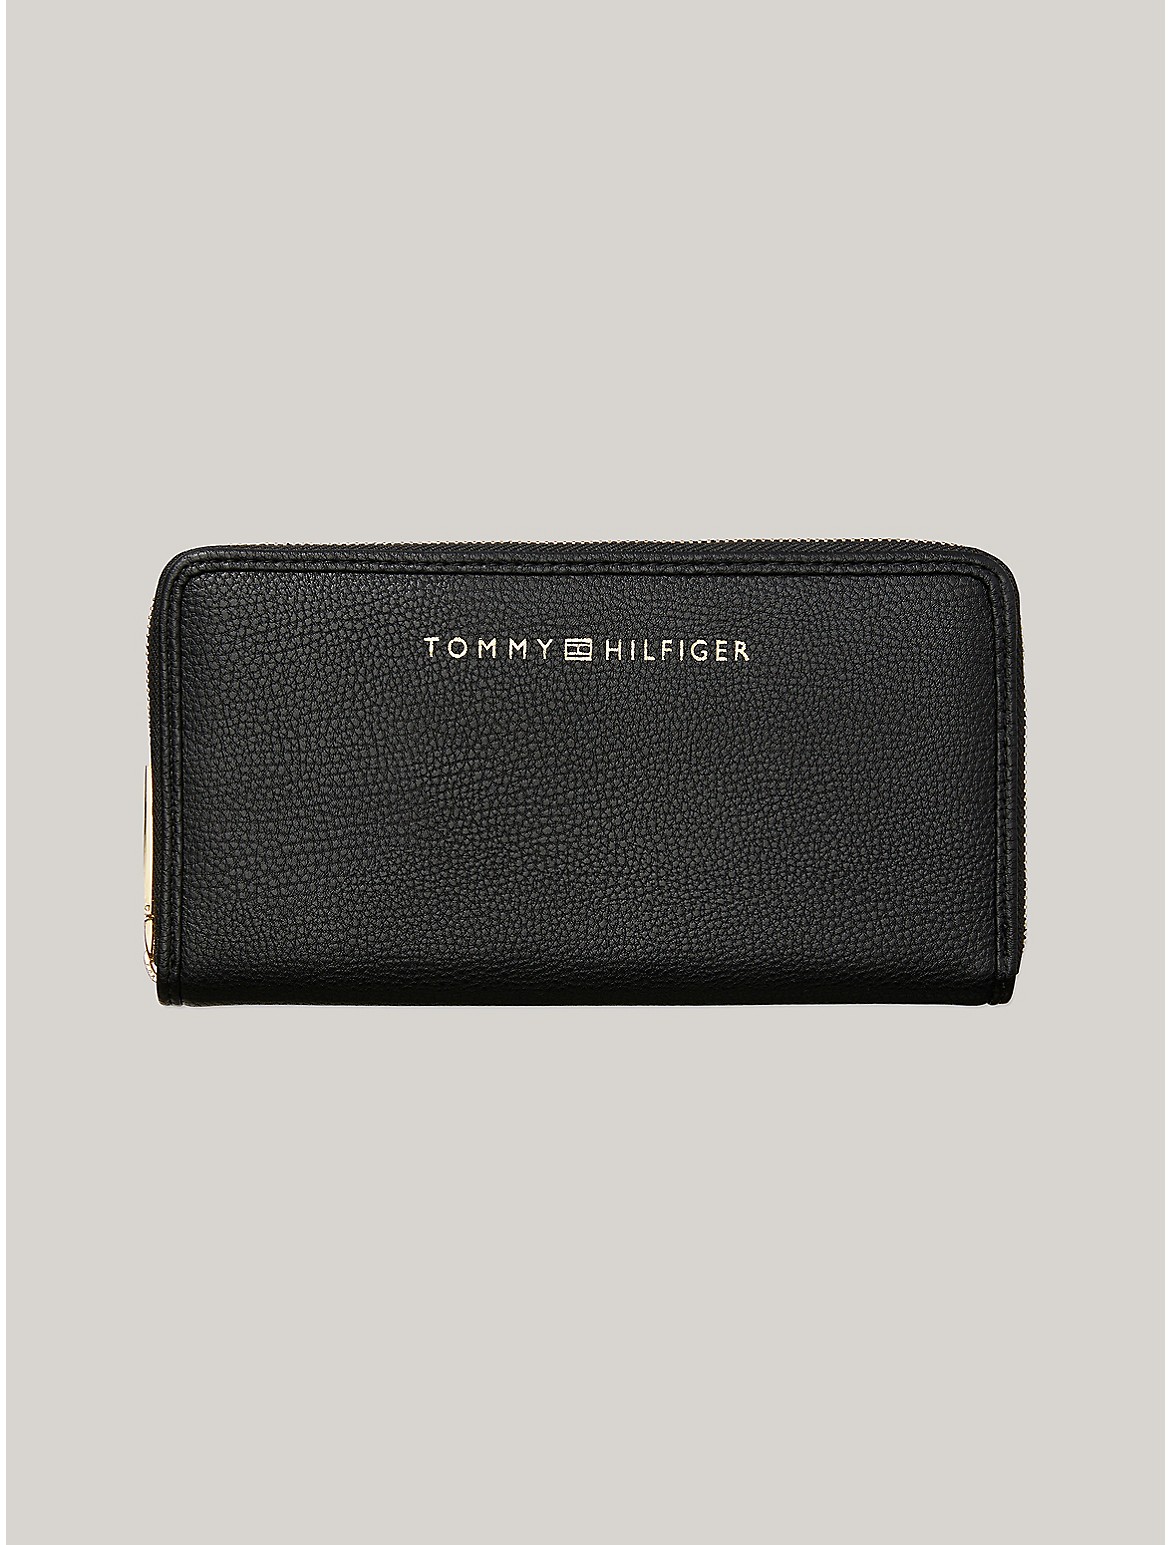 Tommy Hilfiger Women's Large Zip Wallet